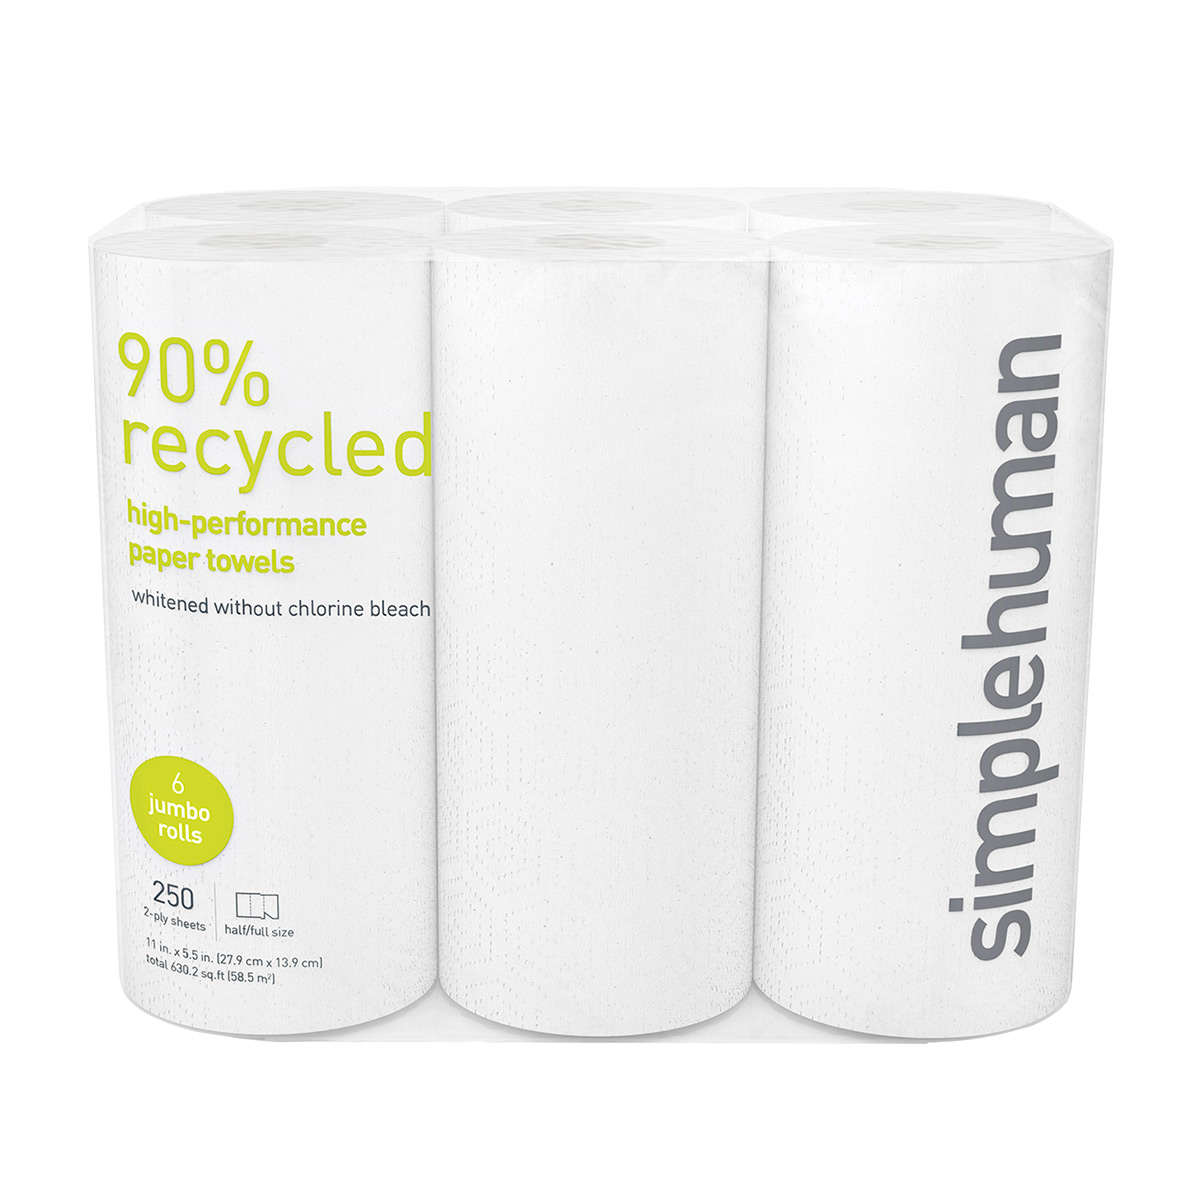 simplehuman Odorsorb Liners Trash Bags - 12 Gallon/40ct